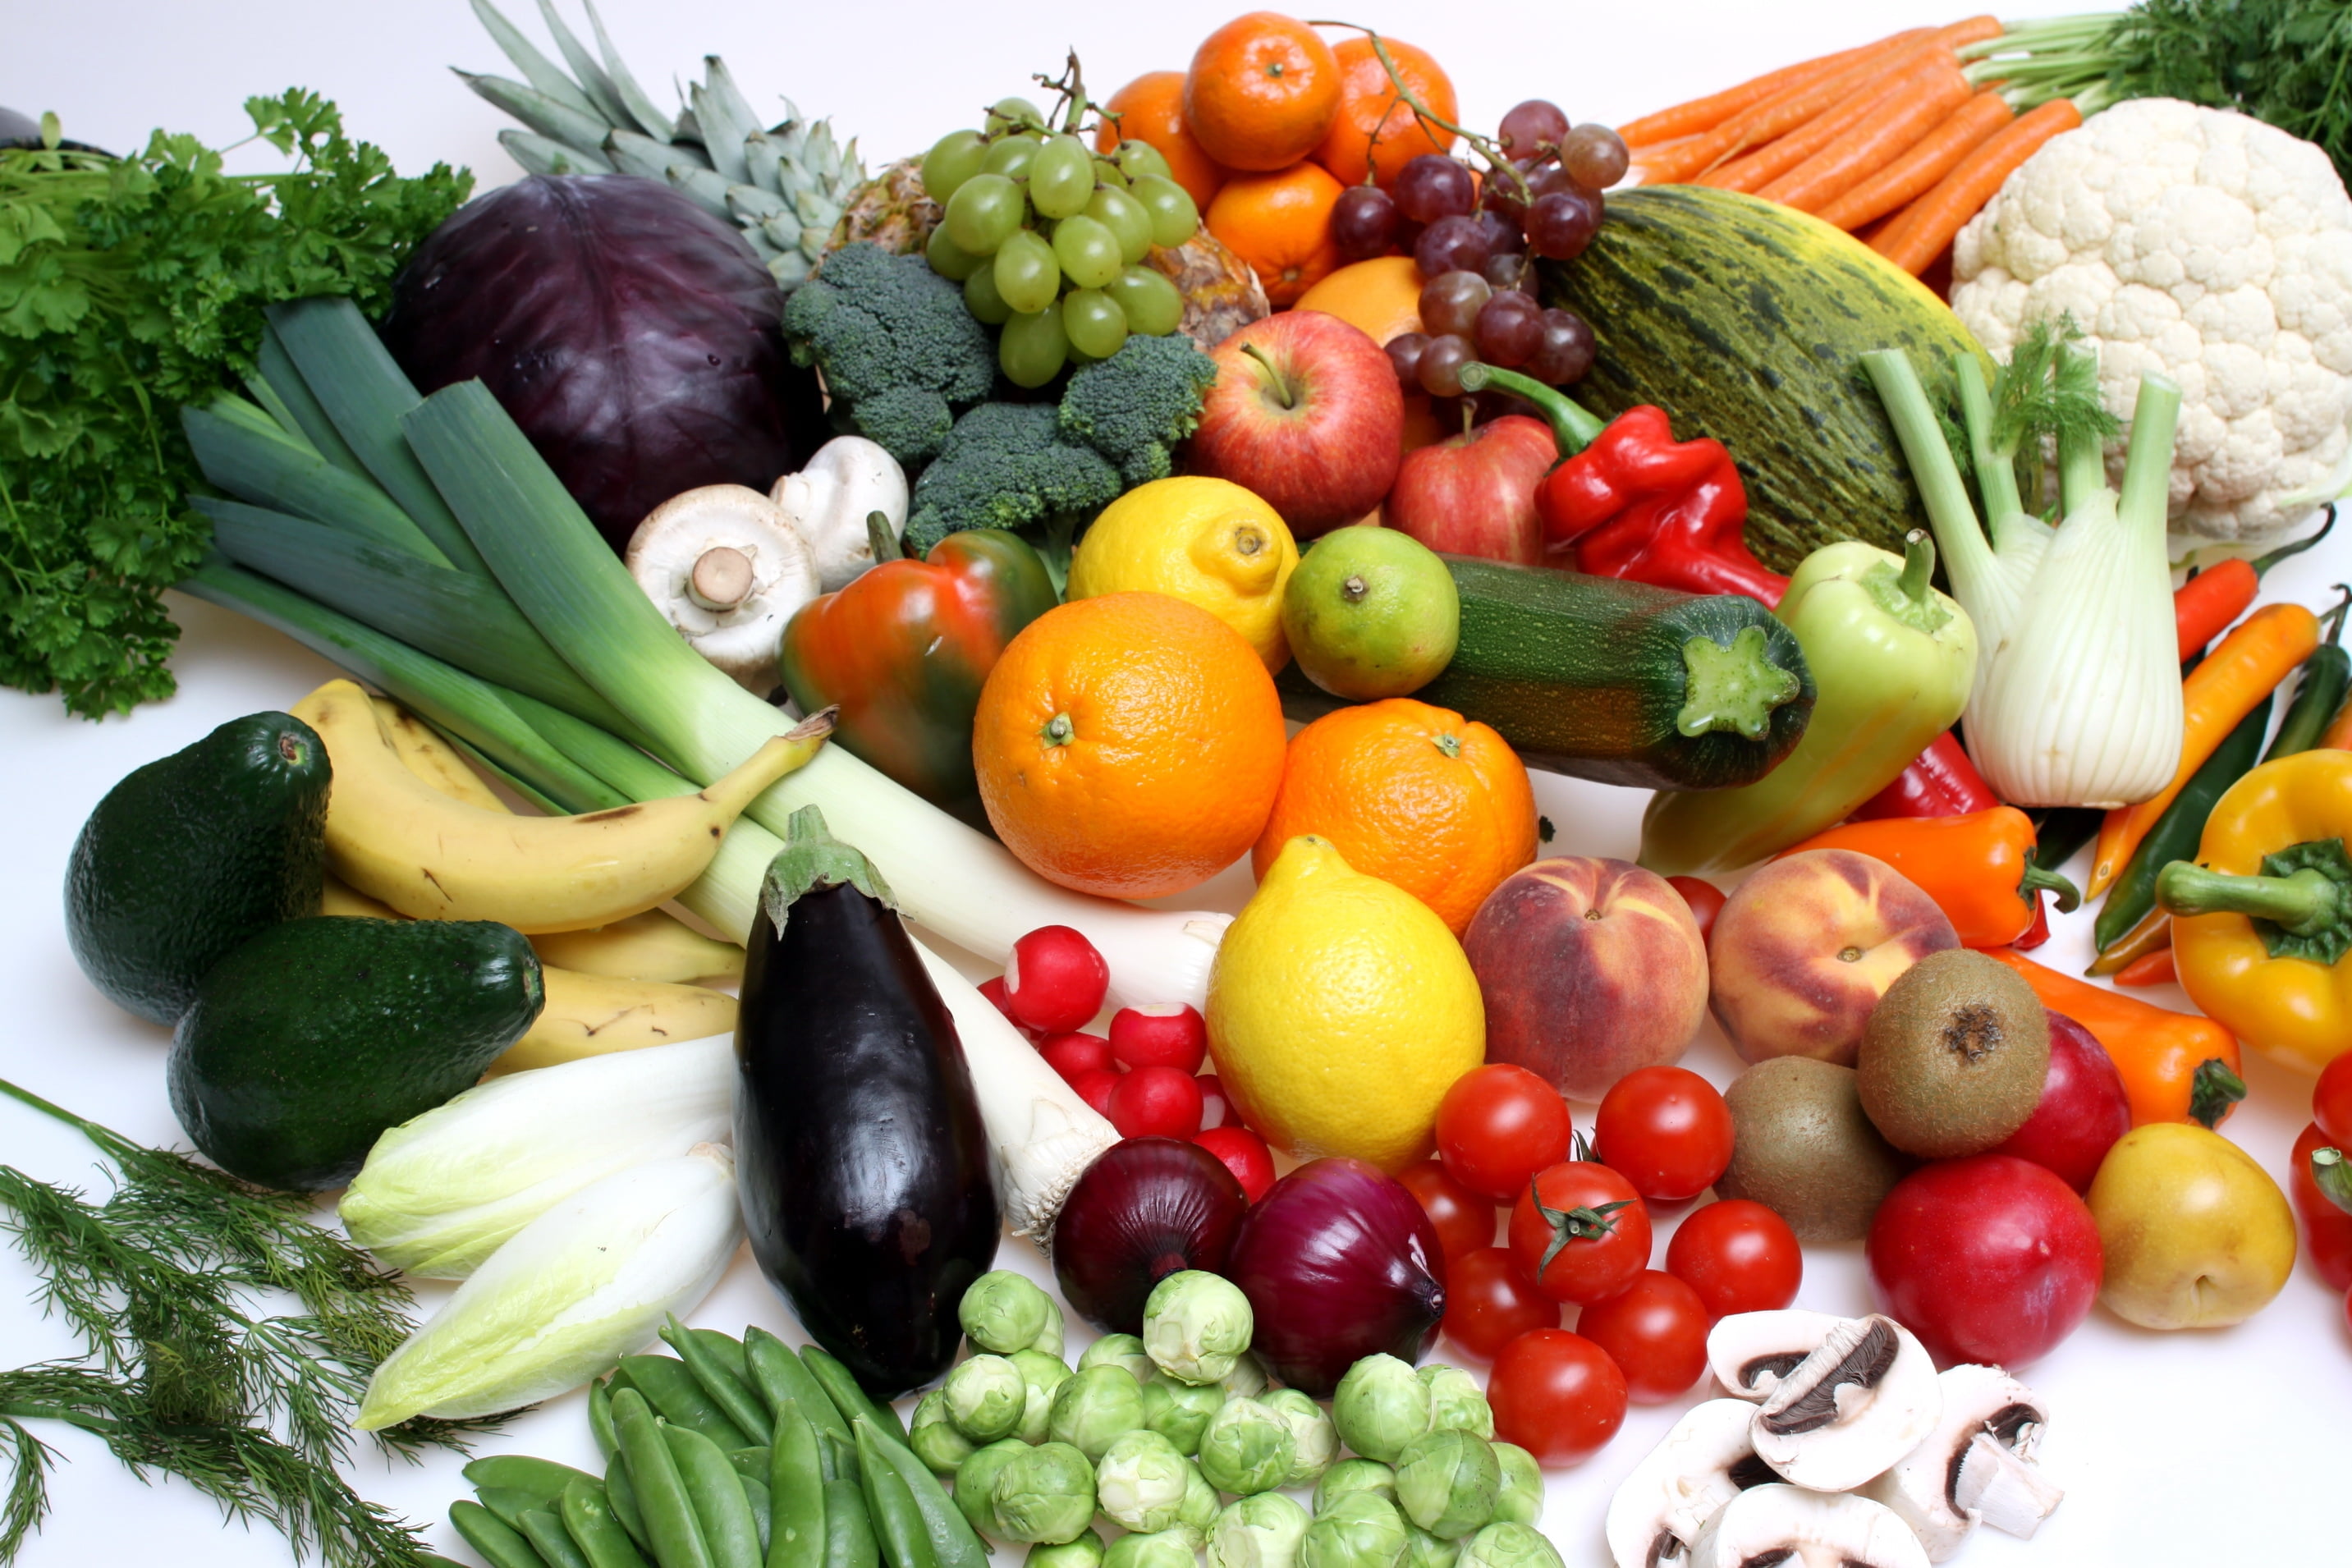 vegetables and fruits arrangement